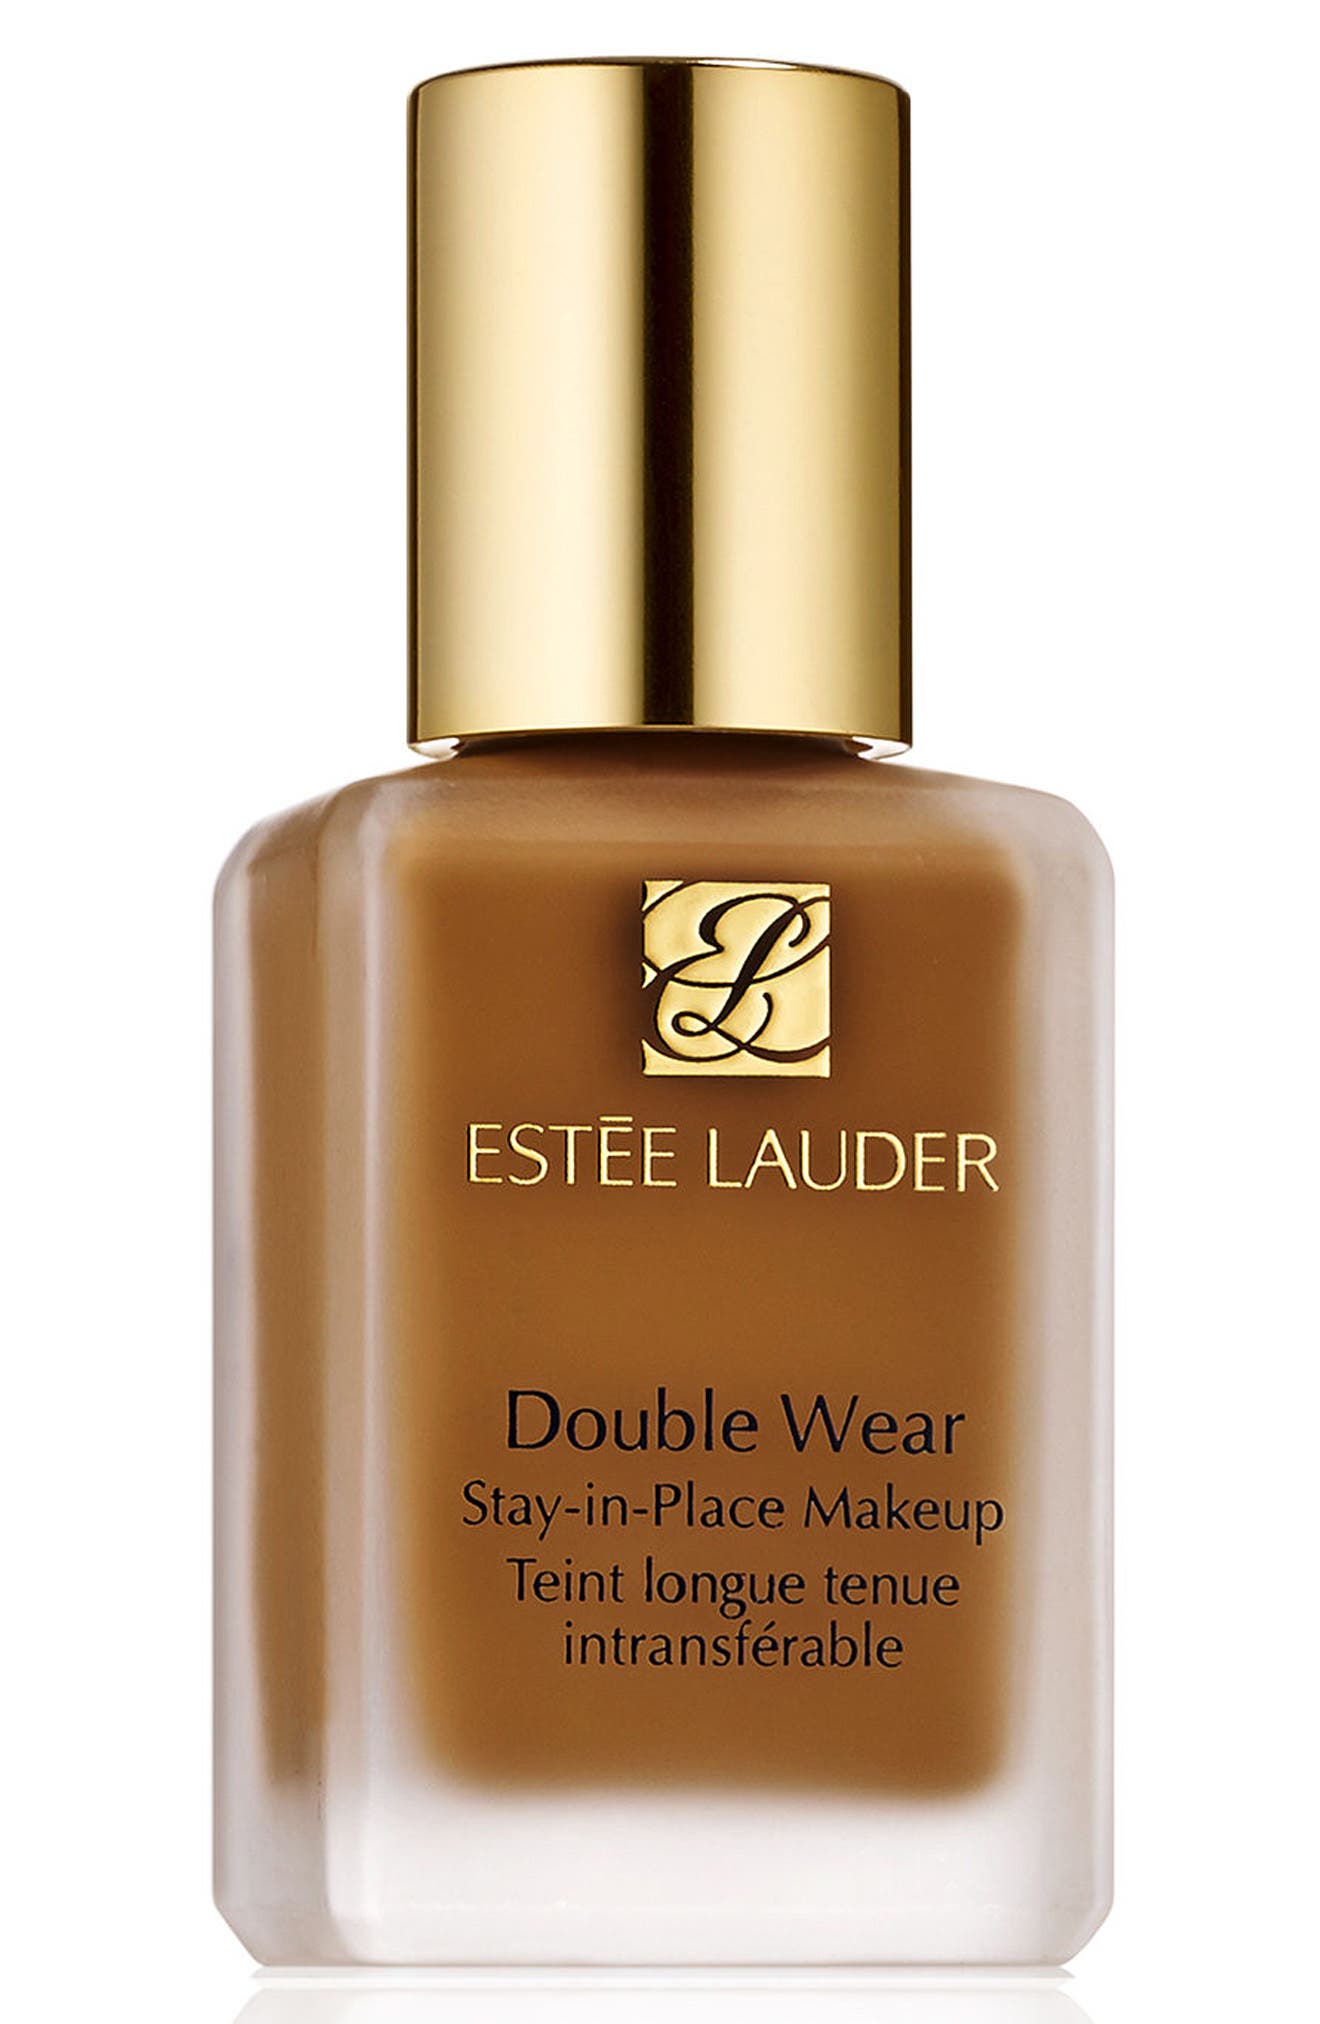 Estee Lauder Double Wear Tone Chart